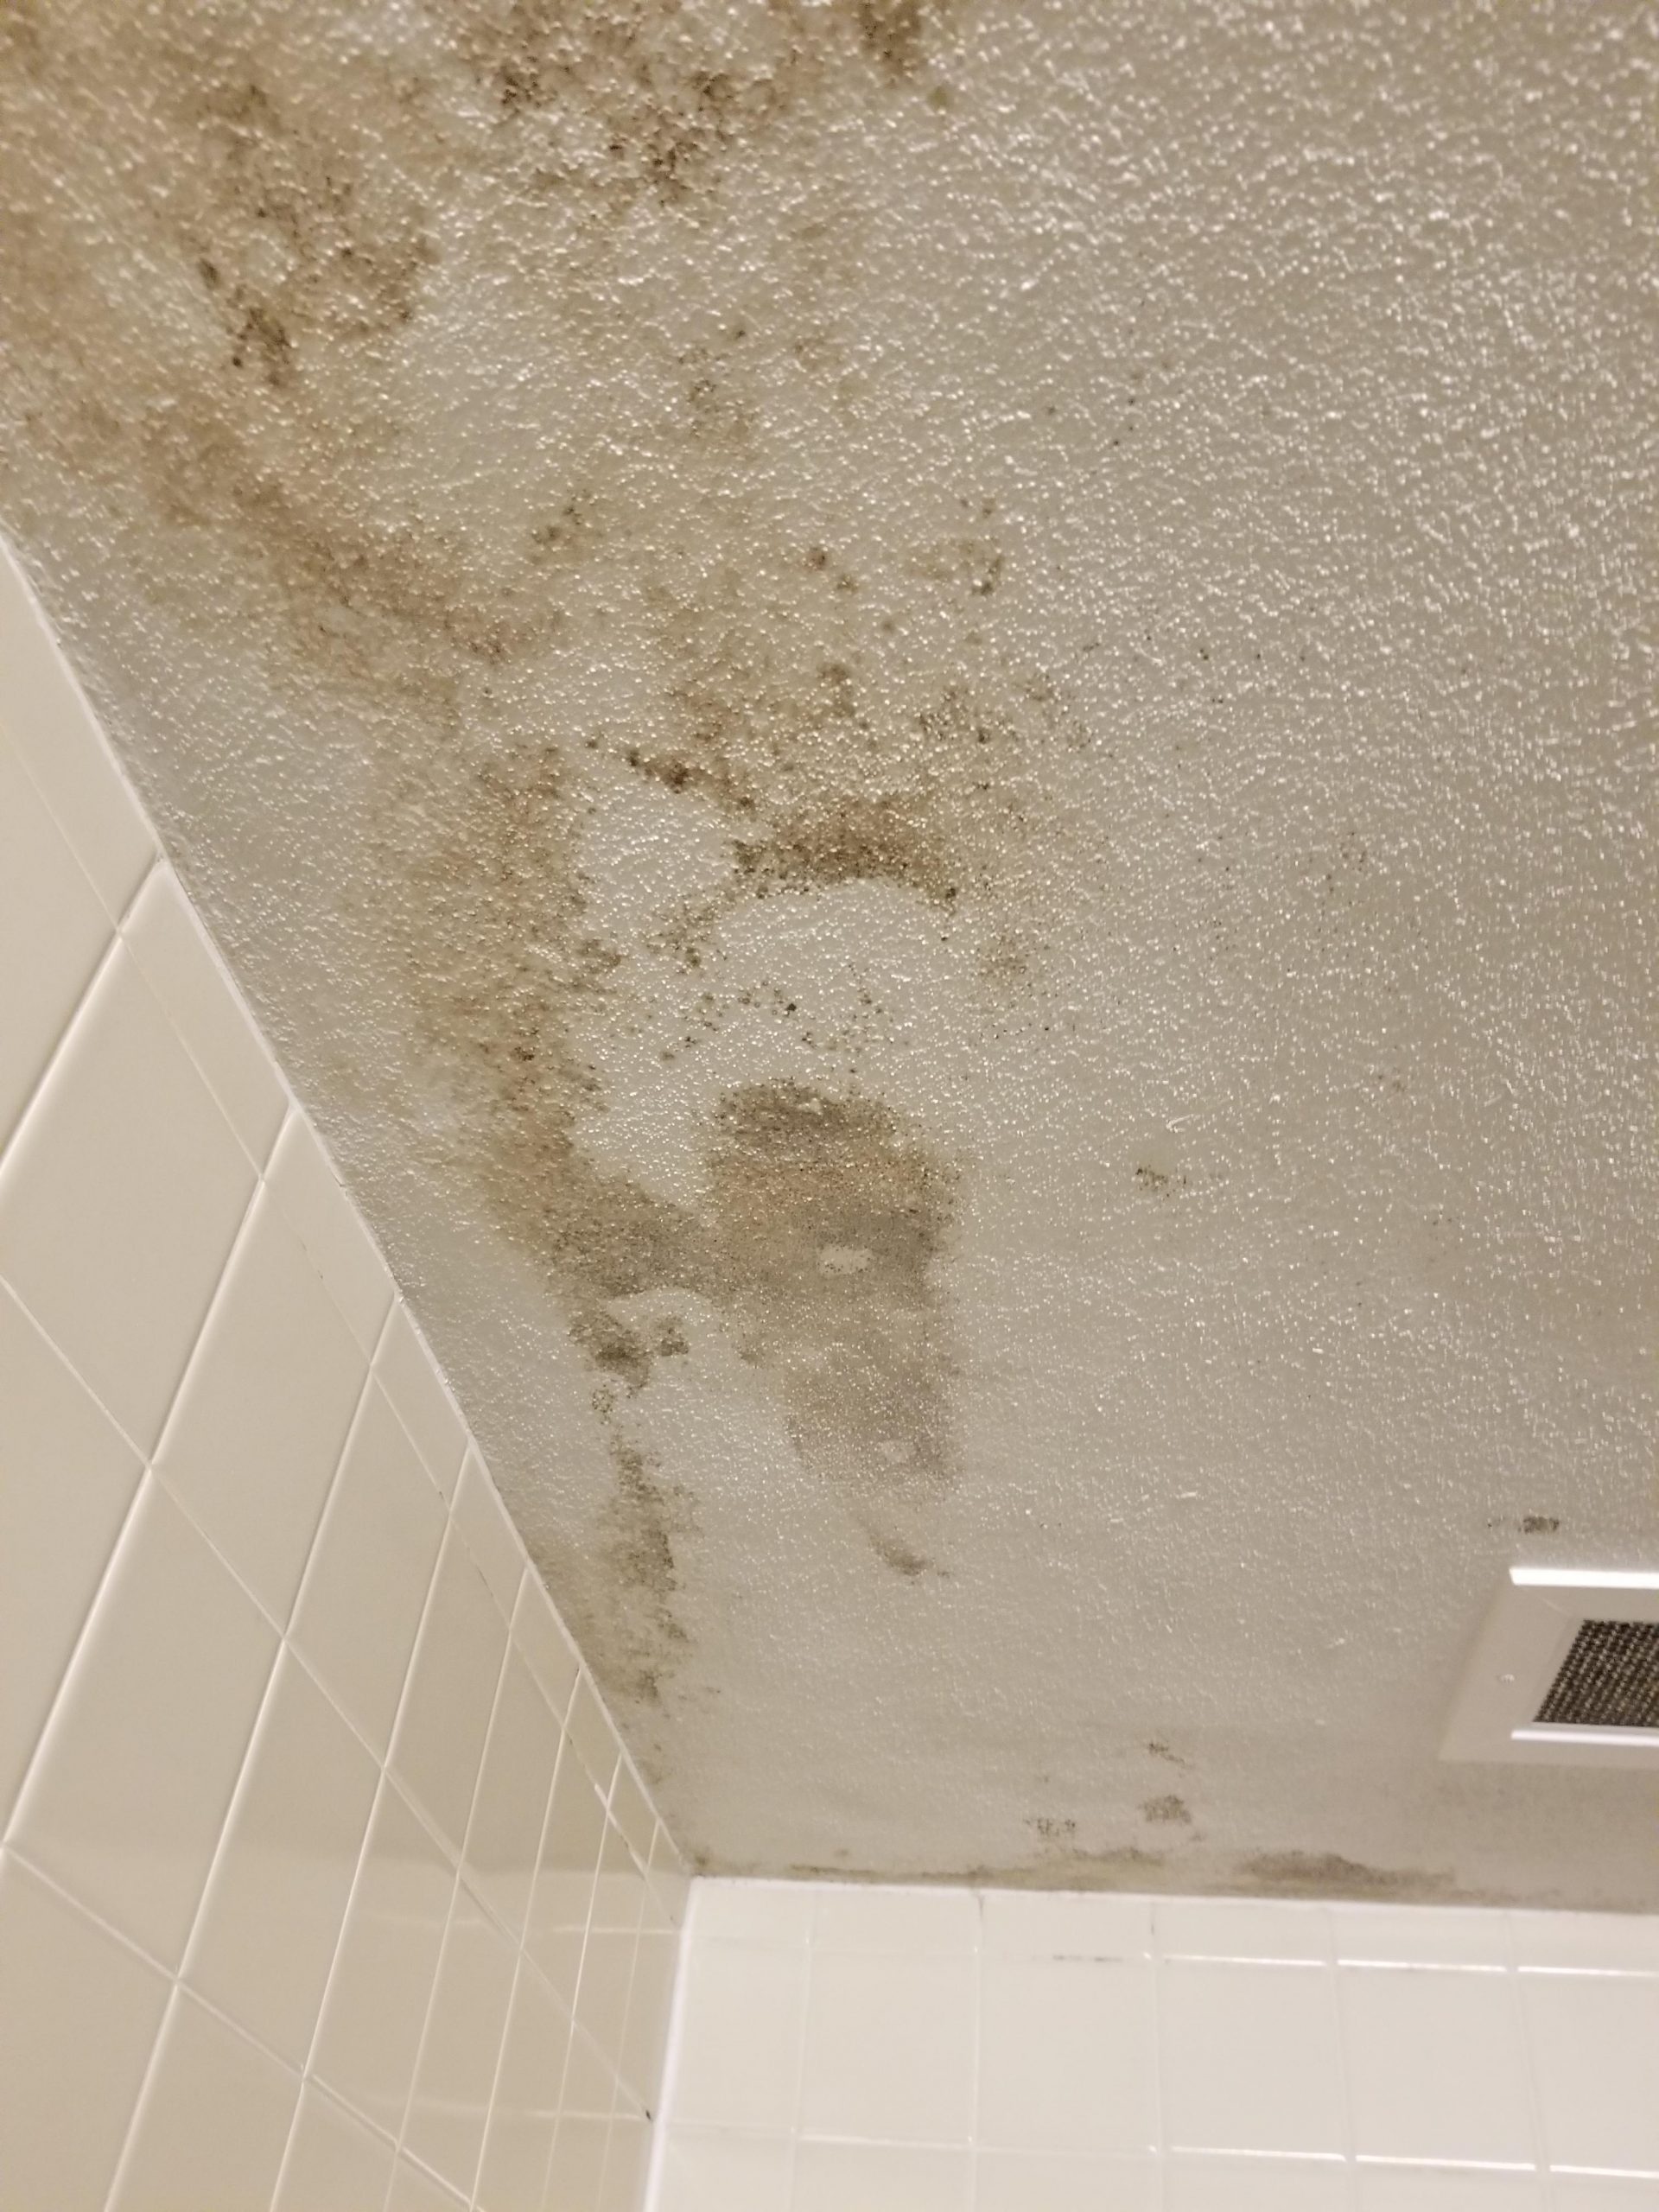 Only at NAU gabladon dorm does mold grow on ur bathroom ...